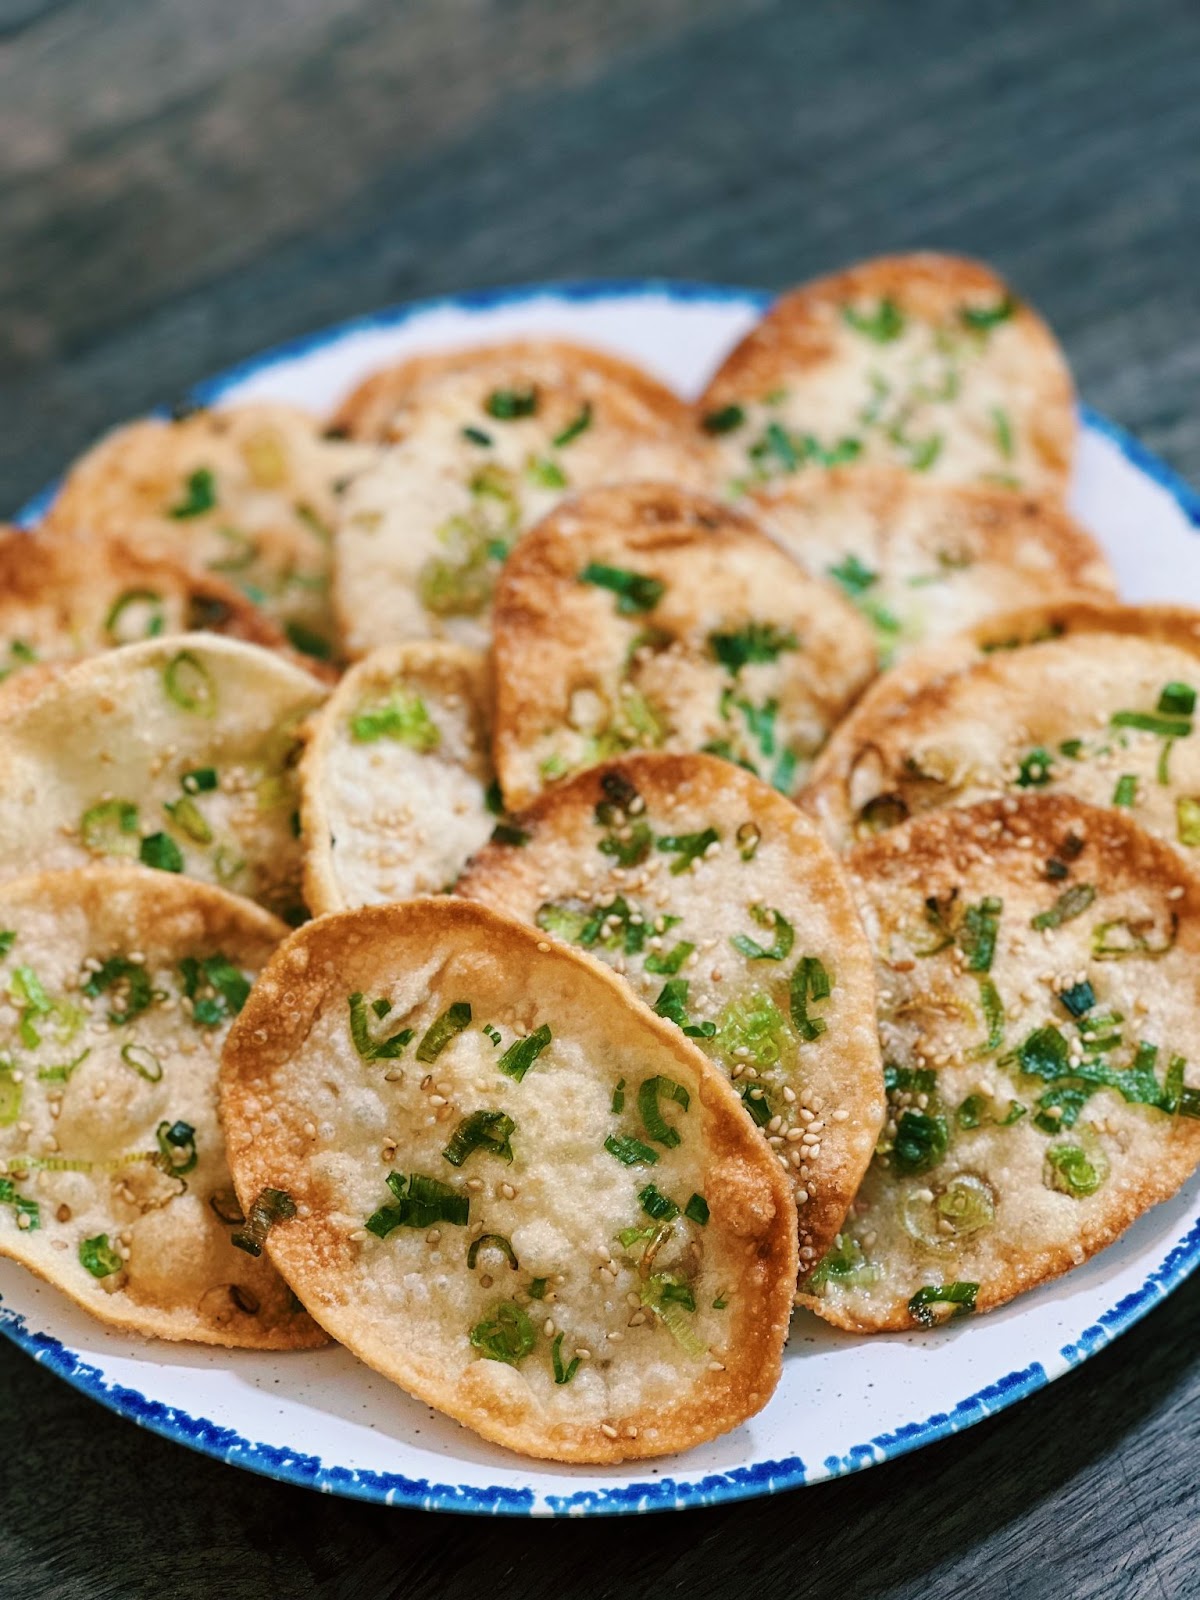 Green Onion Dumpling Chips (3 Ingredients, 5 Minutes!)